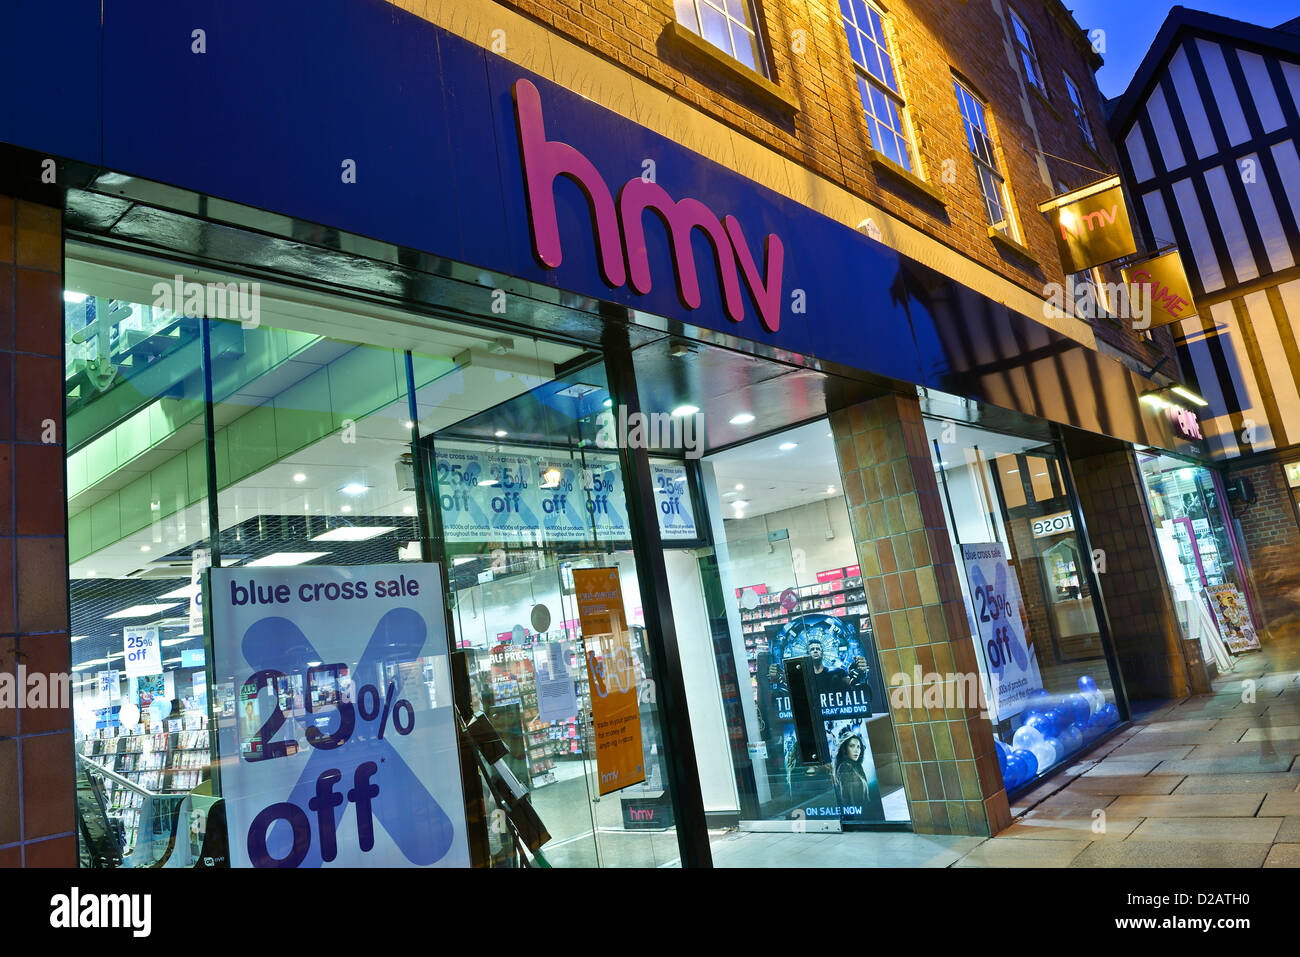 HMV music retailer shop front Stock Photo